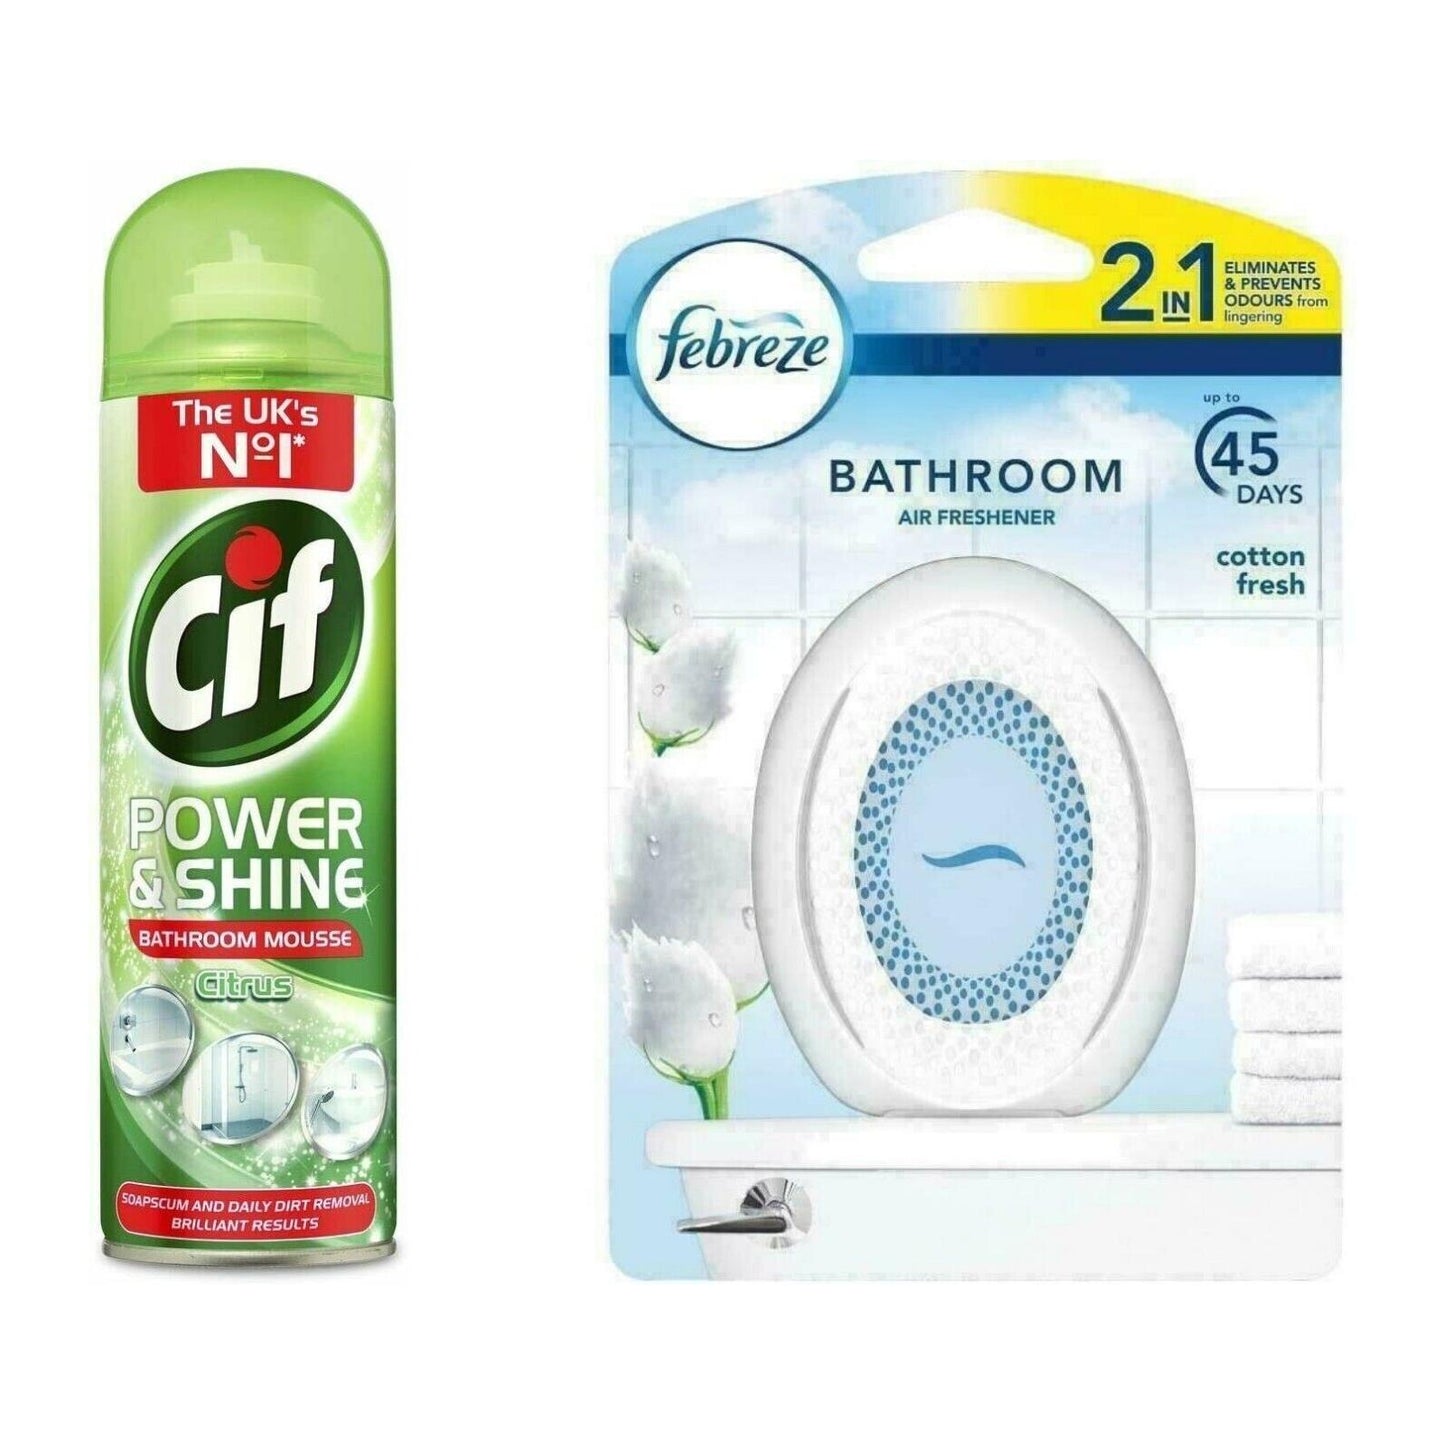 Cif Power and Shine Citrus Bathroom 500ml+ Bathroom Air Freshener Cotton Fresh